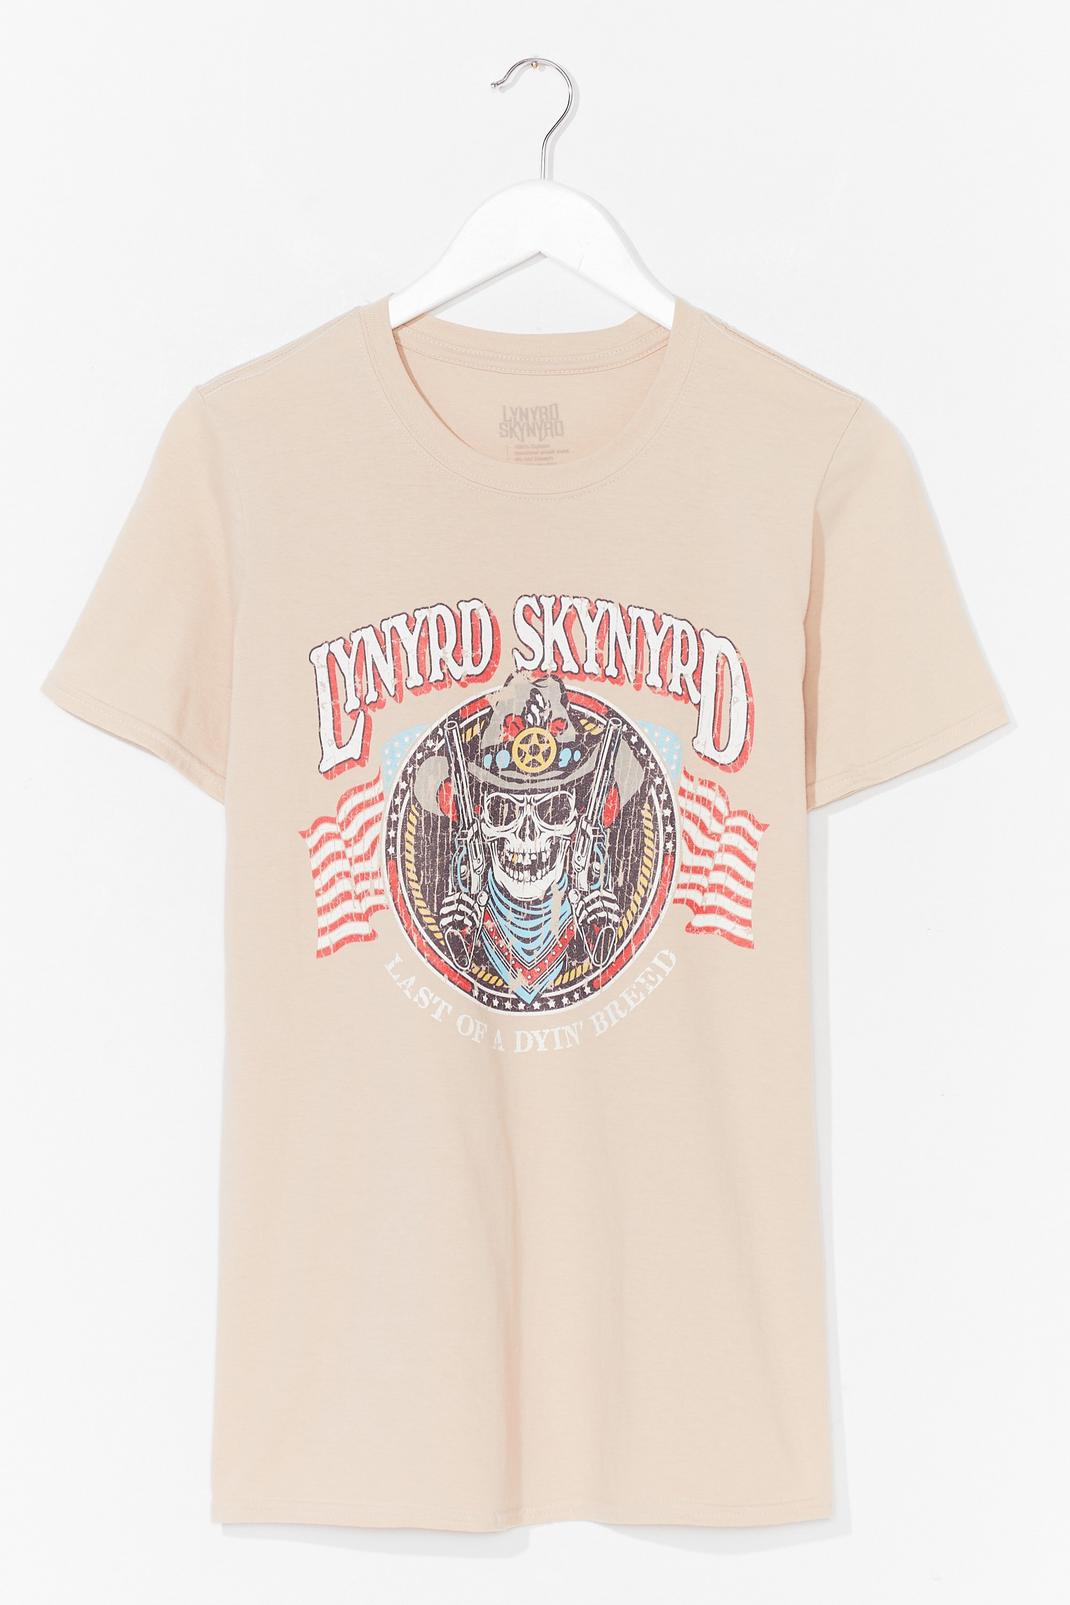 T-shirt de groupe Lynyrd Skynyrd image number 1